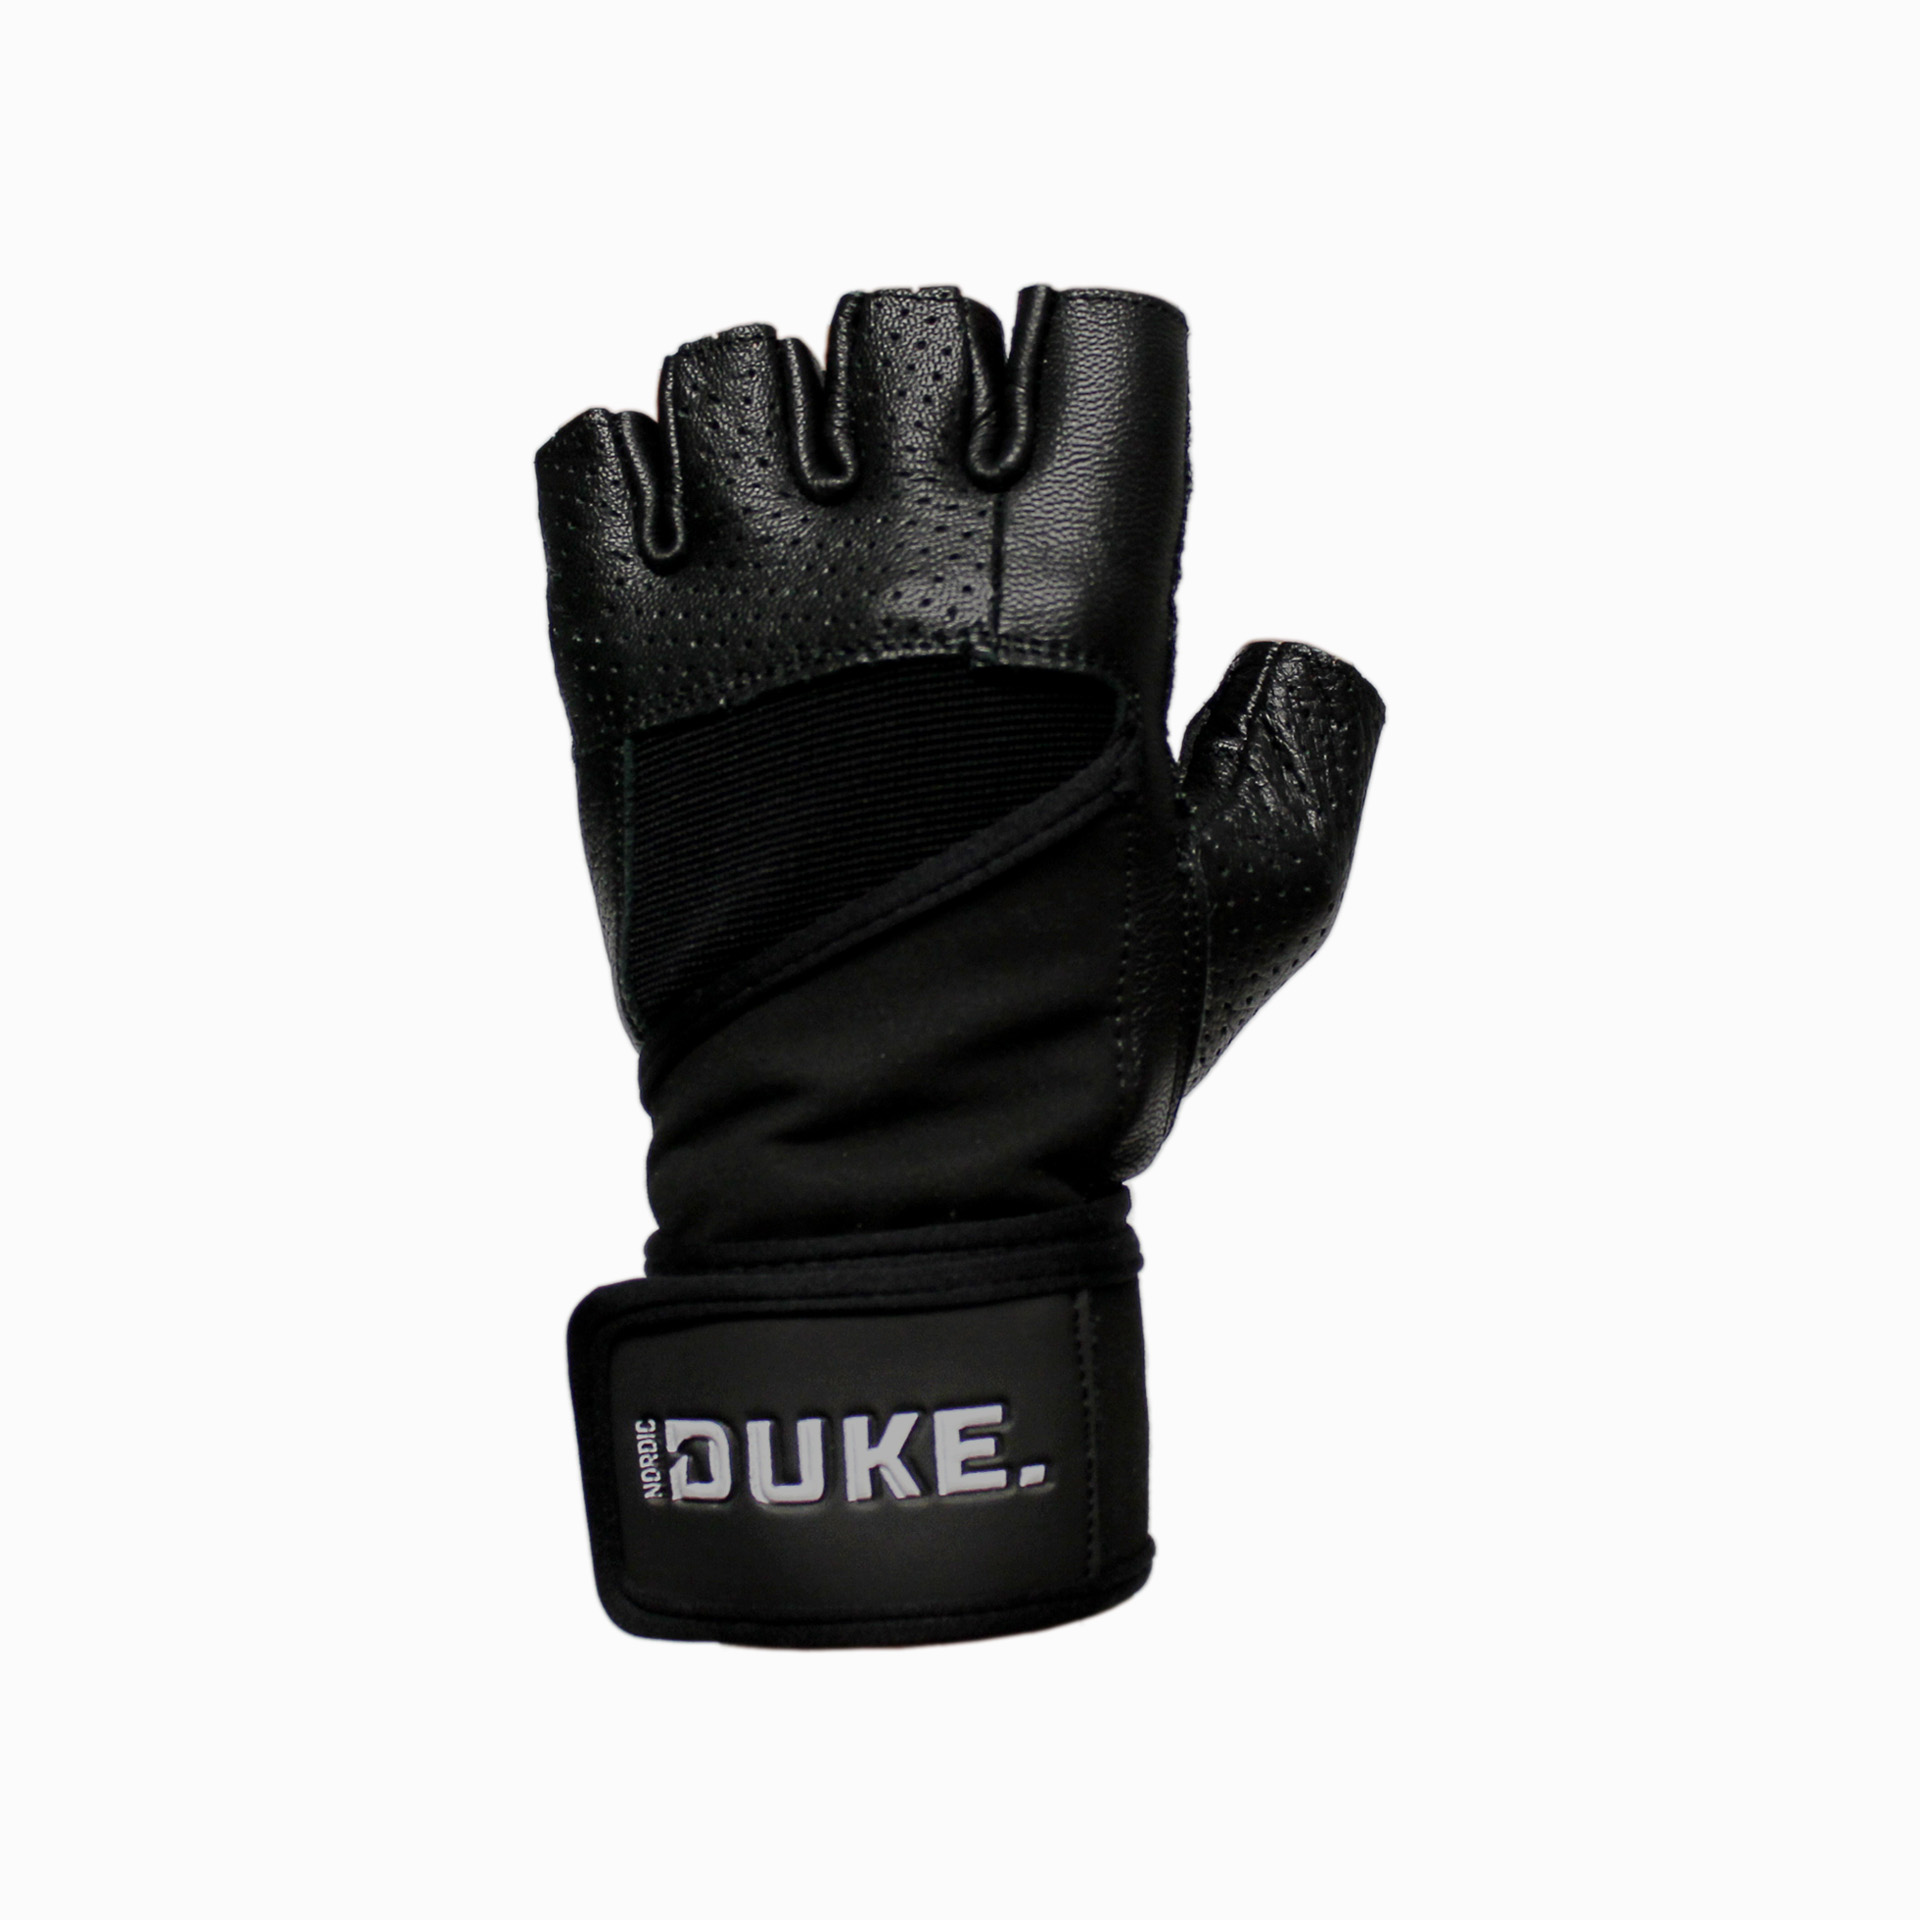 Nordic Duke® Kevlar Pro Gym Gloves with wrist strap.